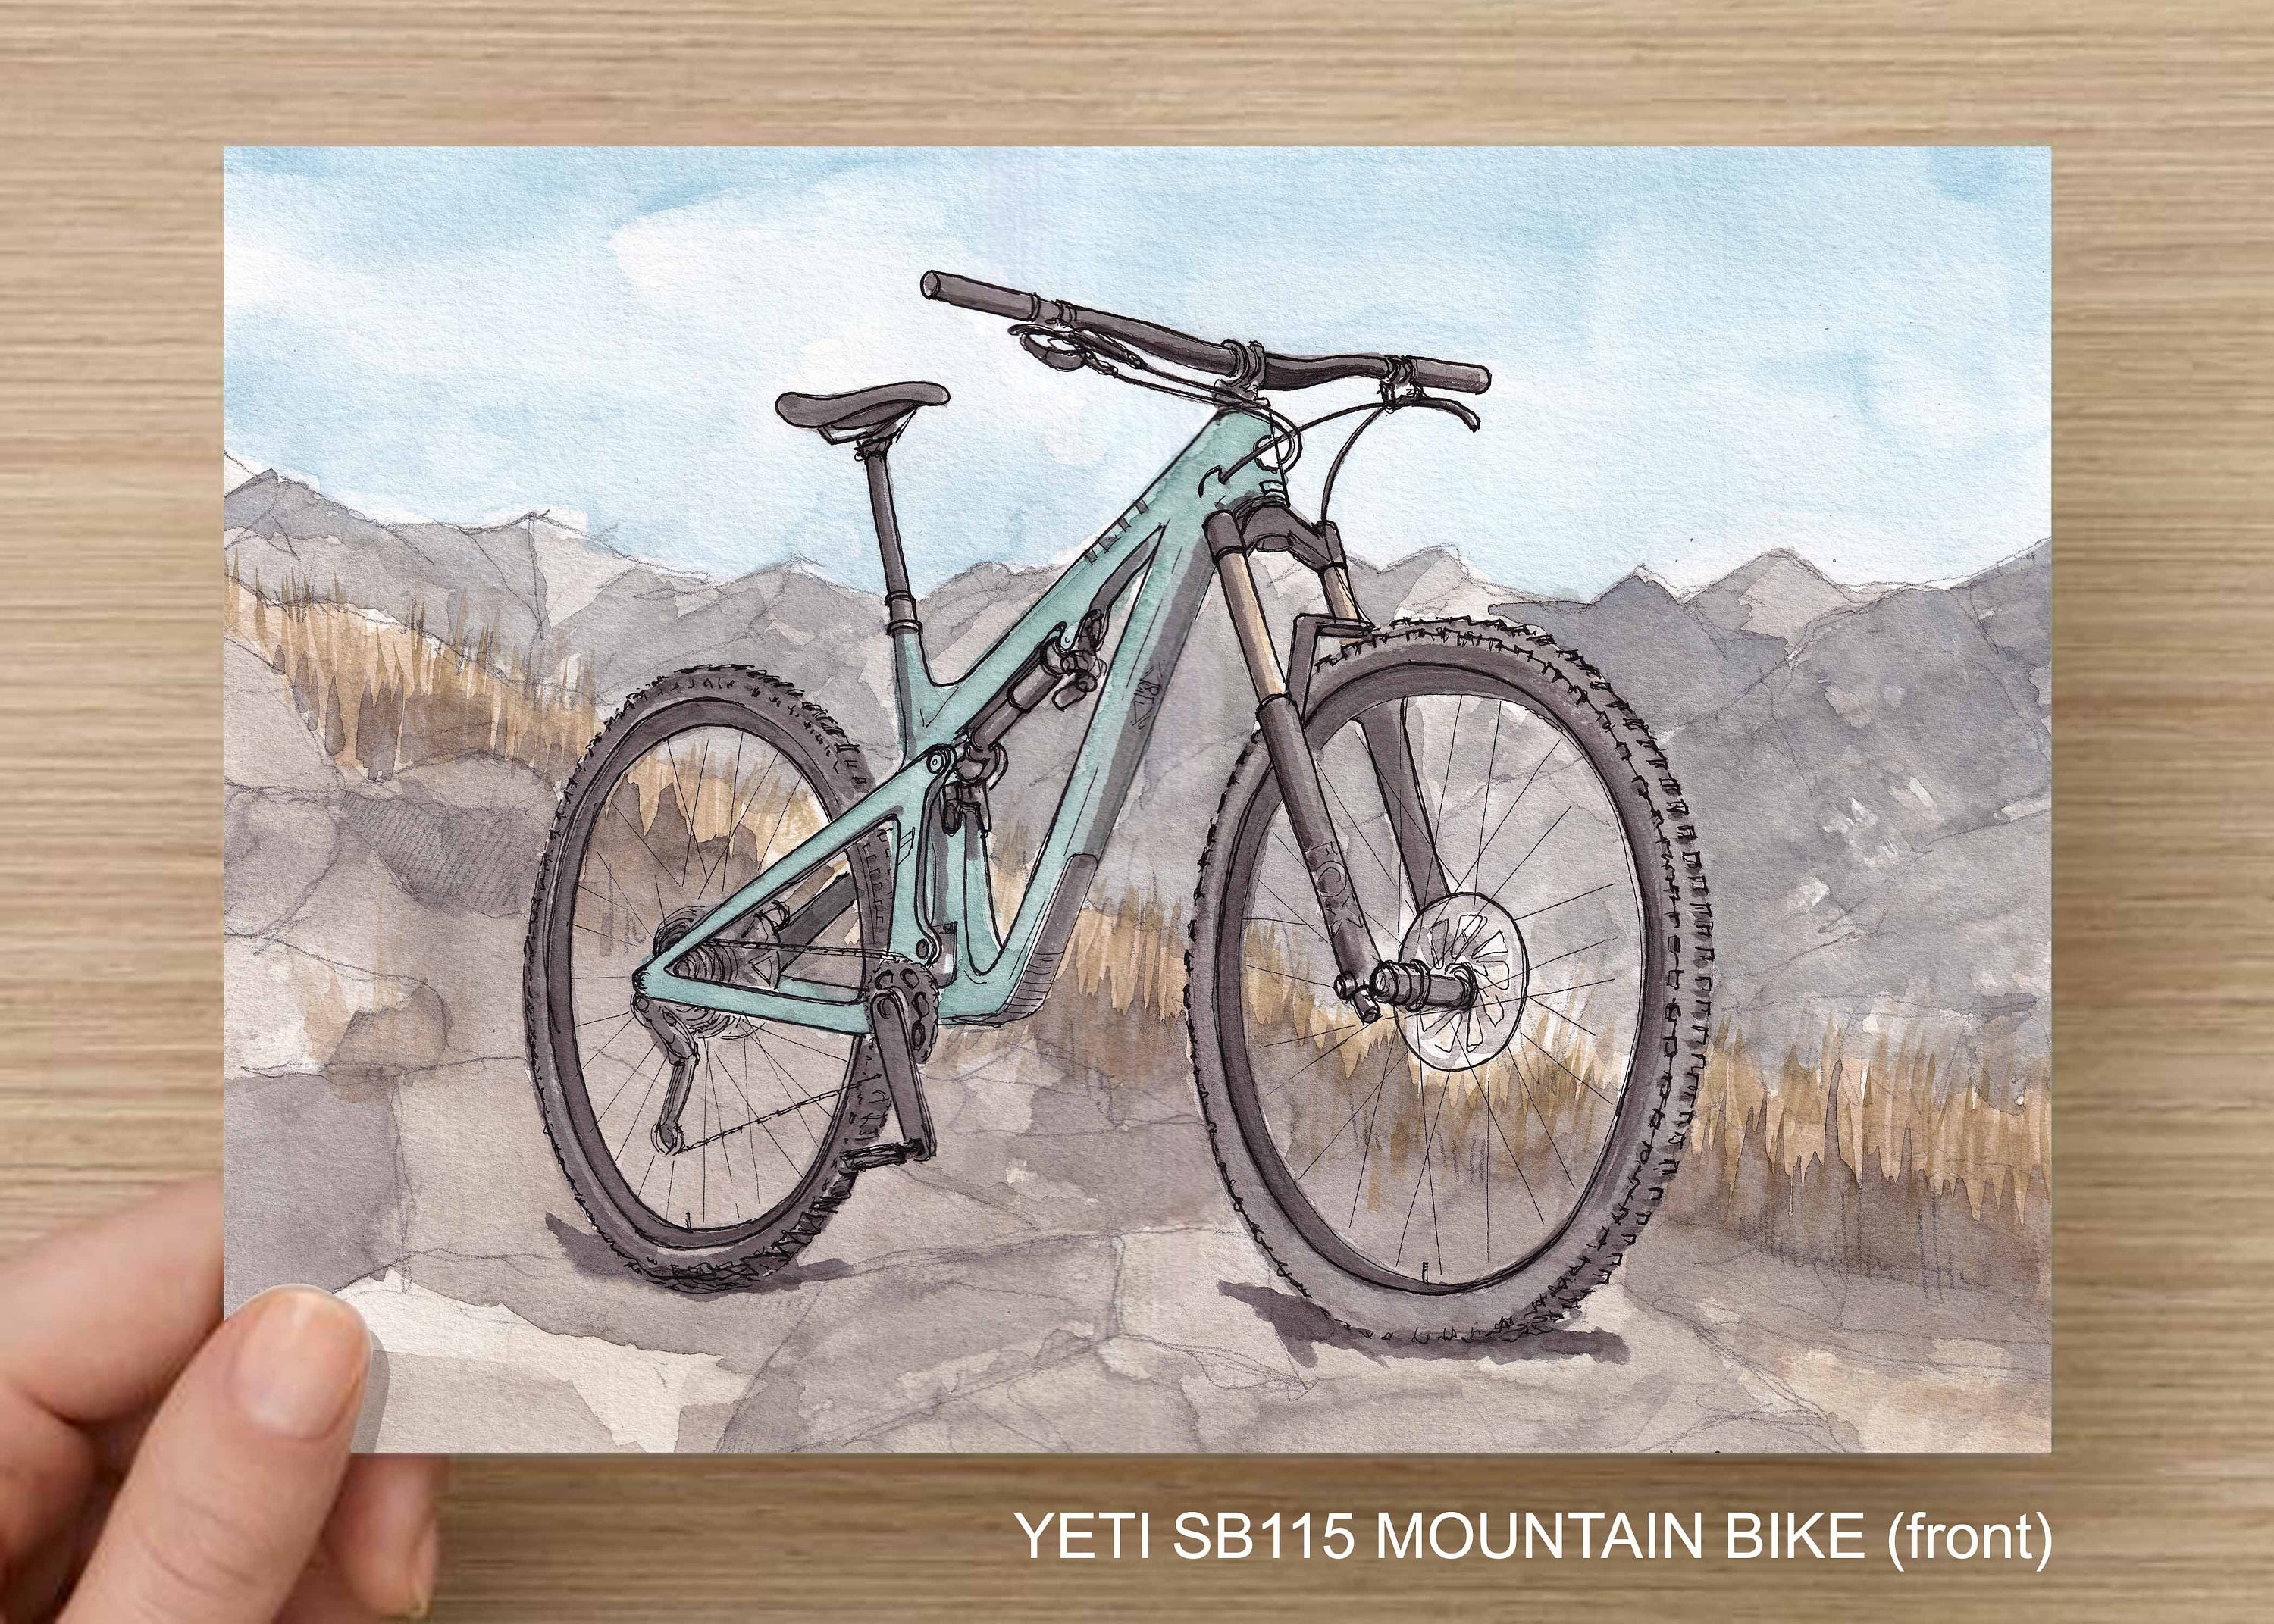 Sketchy Trails  Mountain biking through line art by Xtreena  Pinkbike